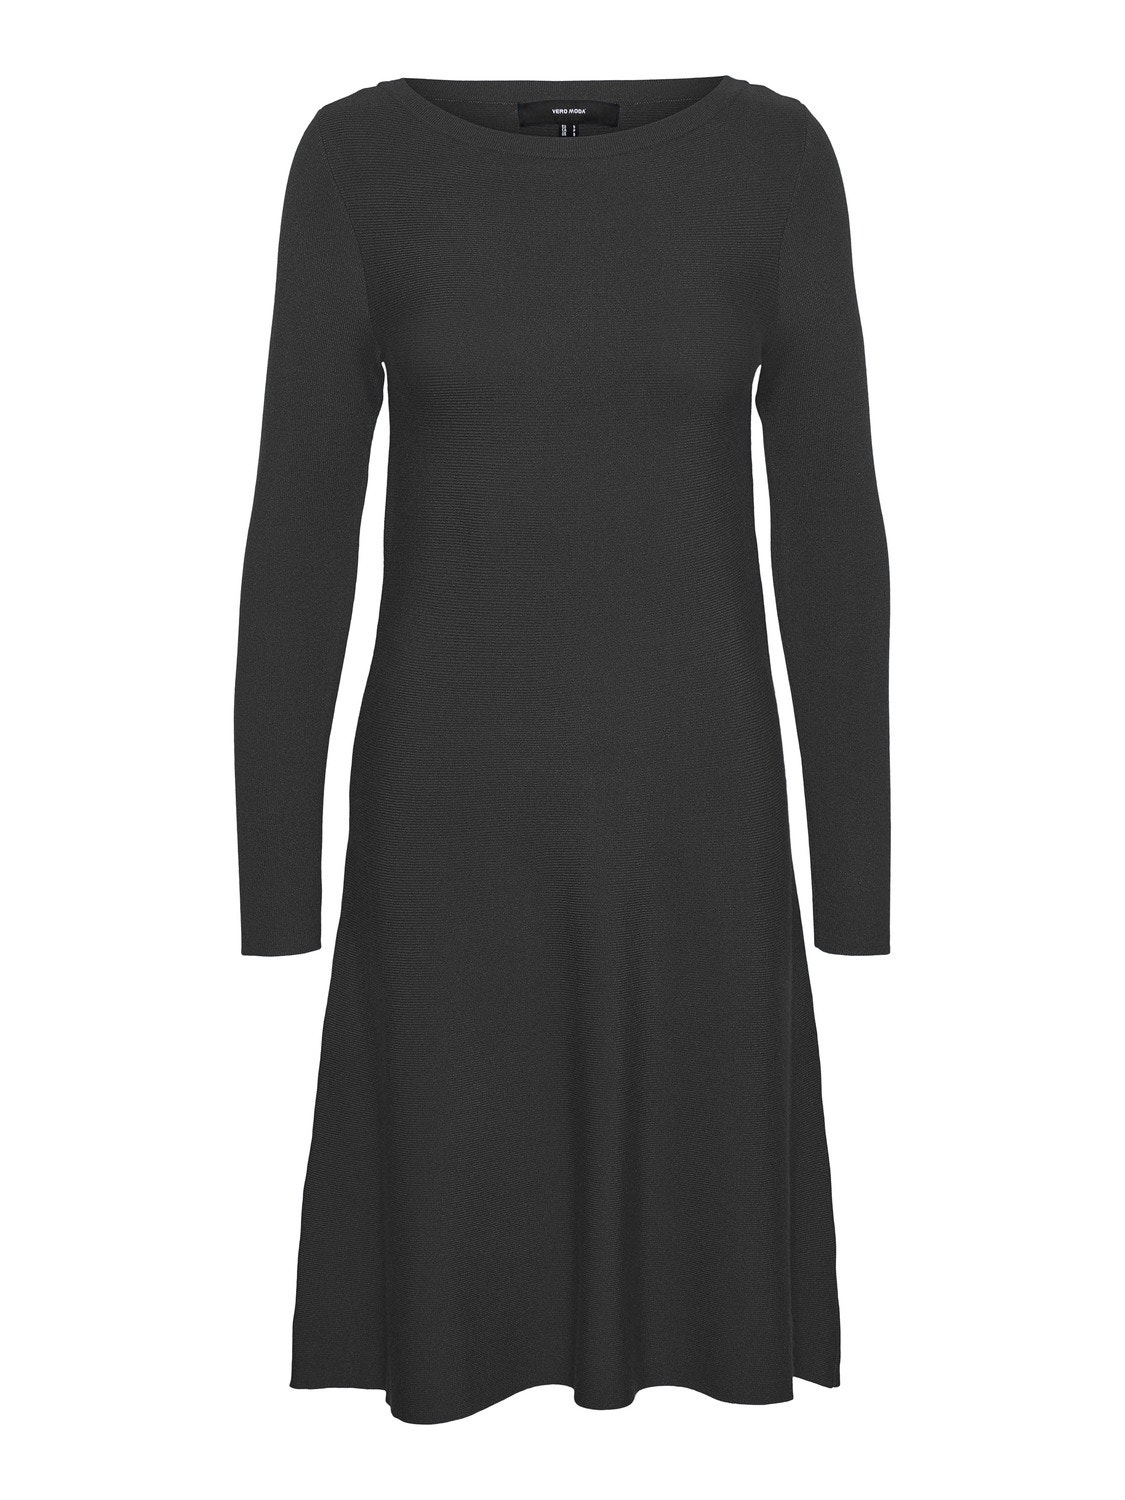 Vero Moda VMNANCY Short dress -Dark Grey Melange - 10254807